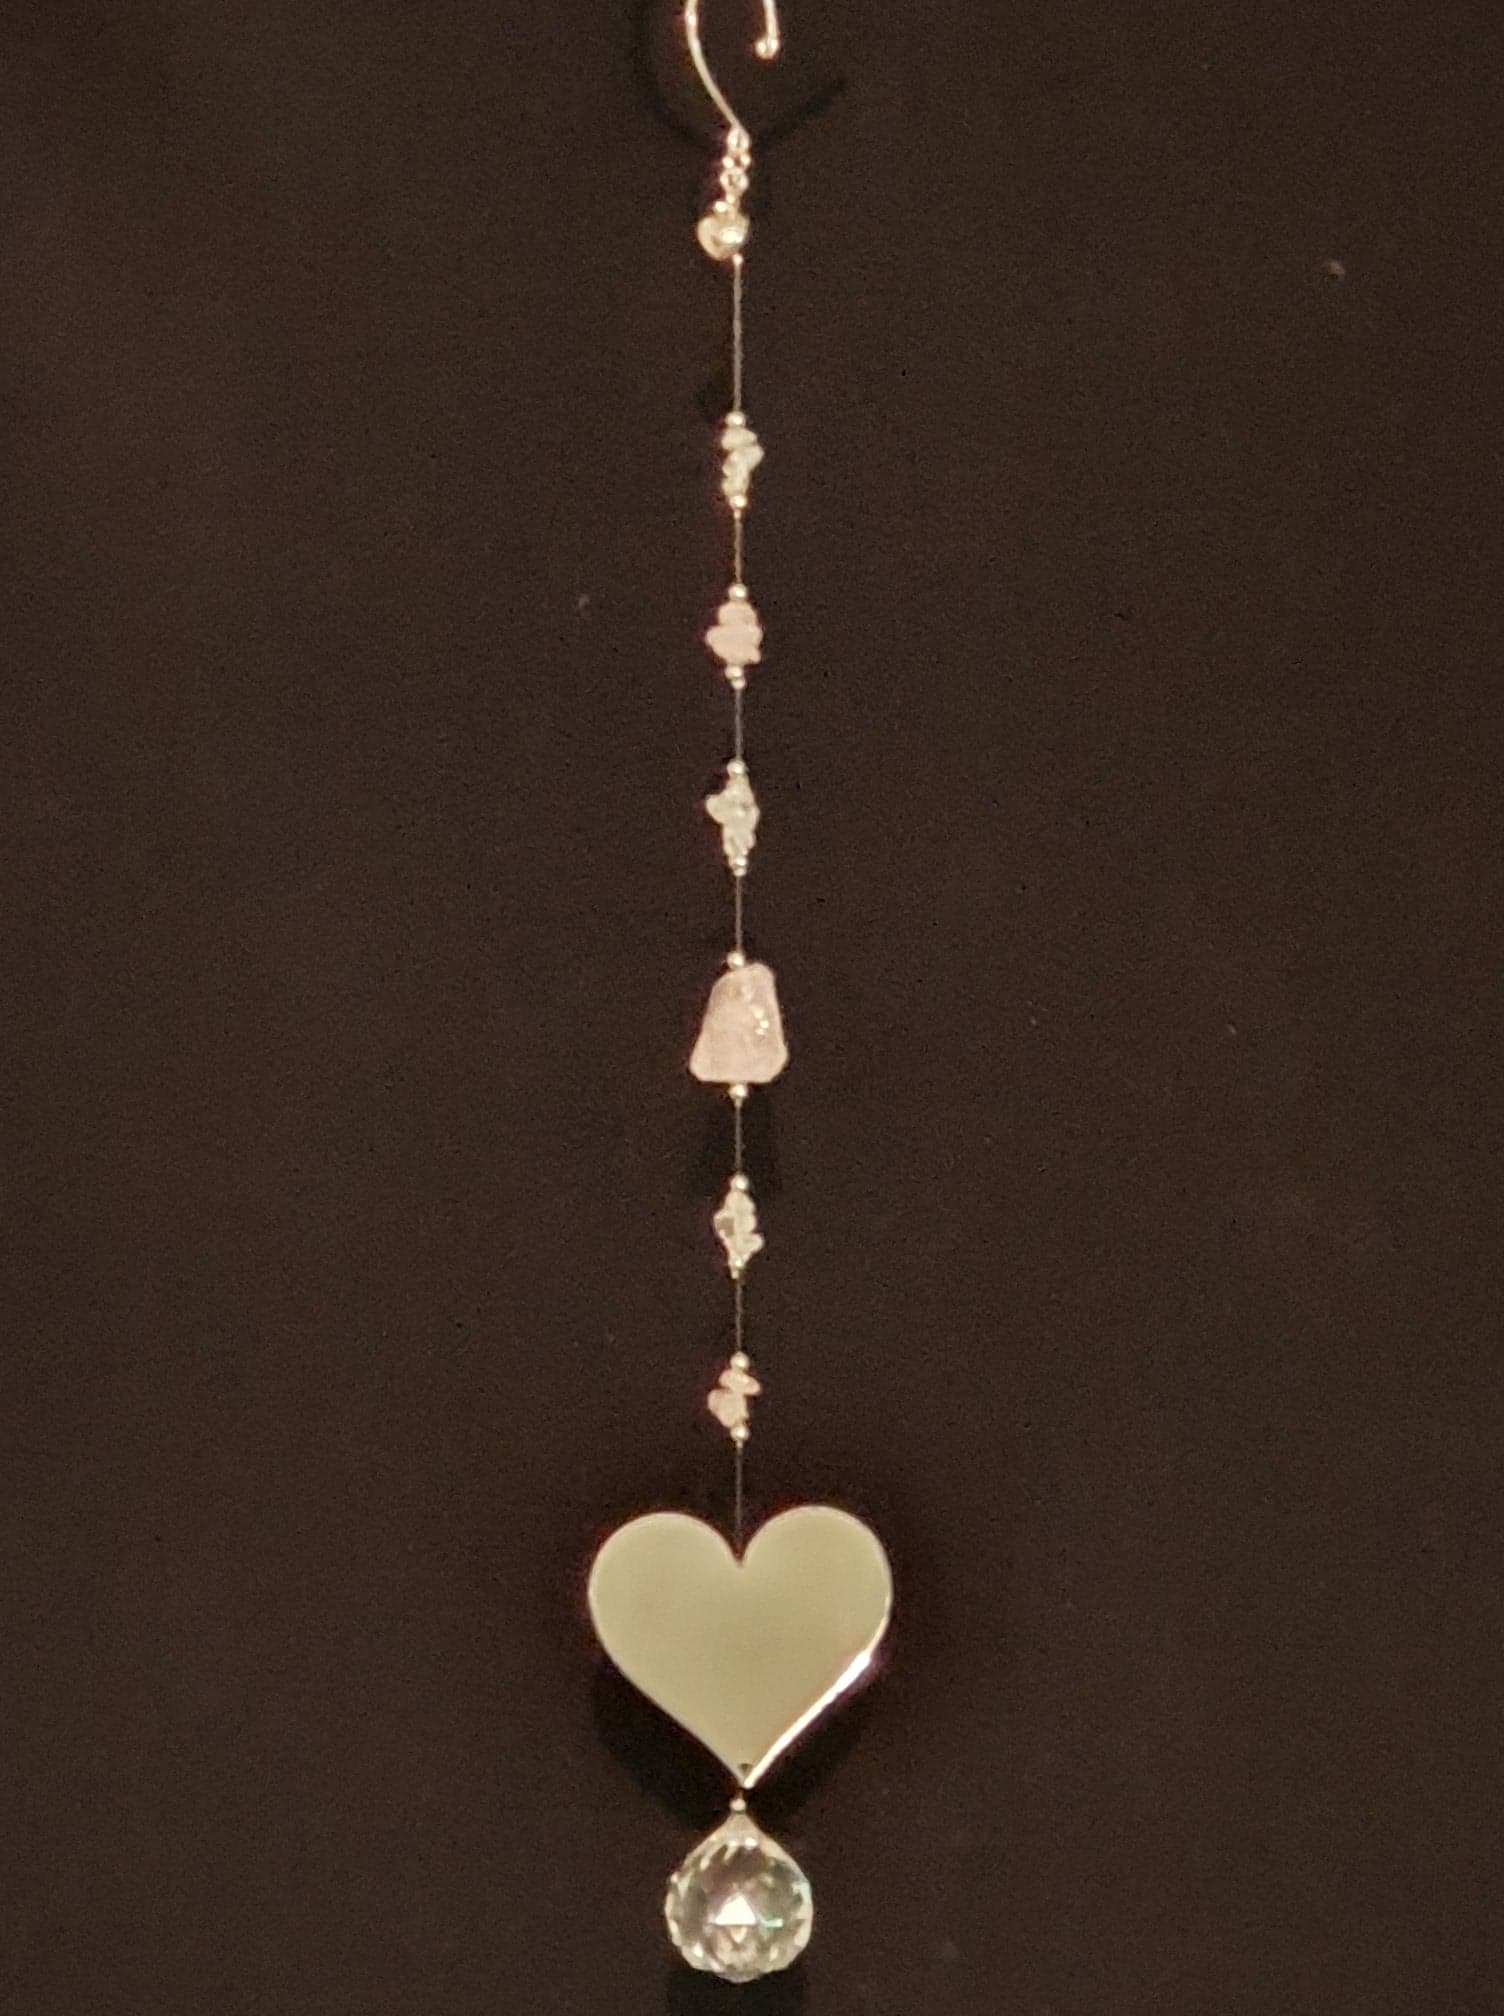 Heart Mirror with Semi-precious Rose Quartz & Clear Quartz crystals single drop suncatcher